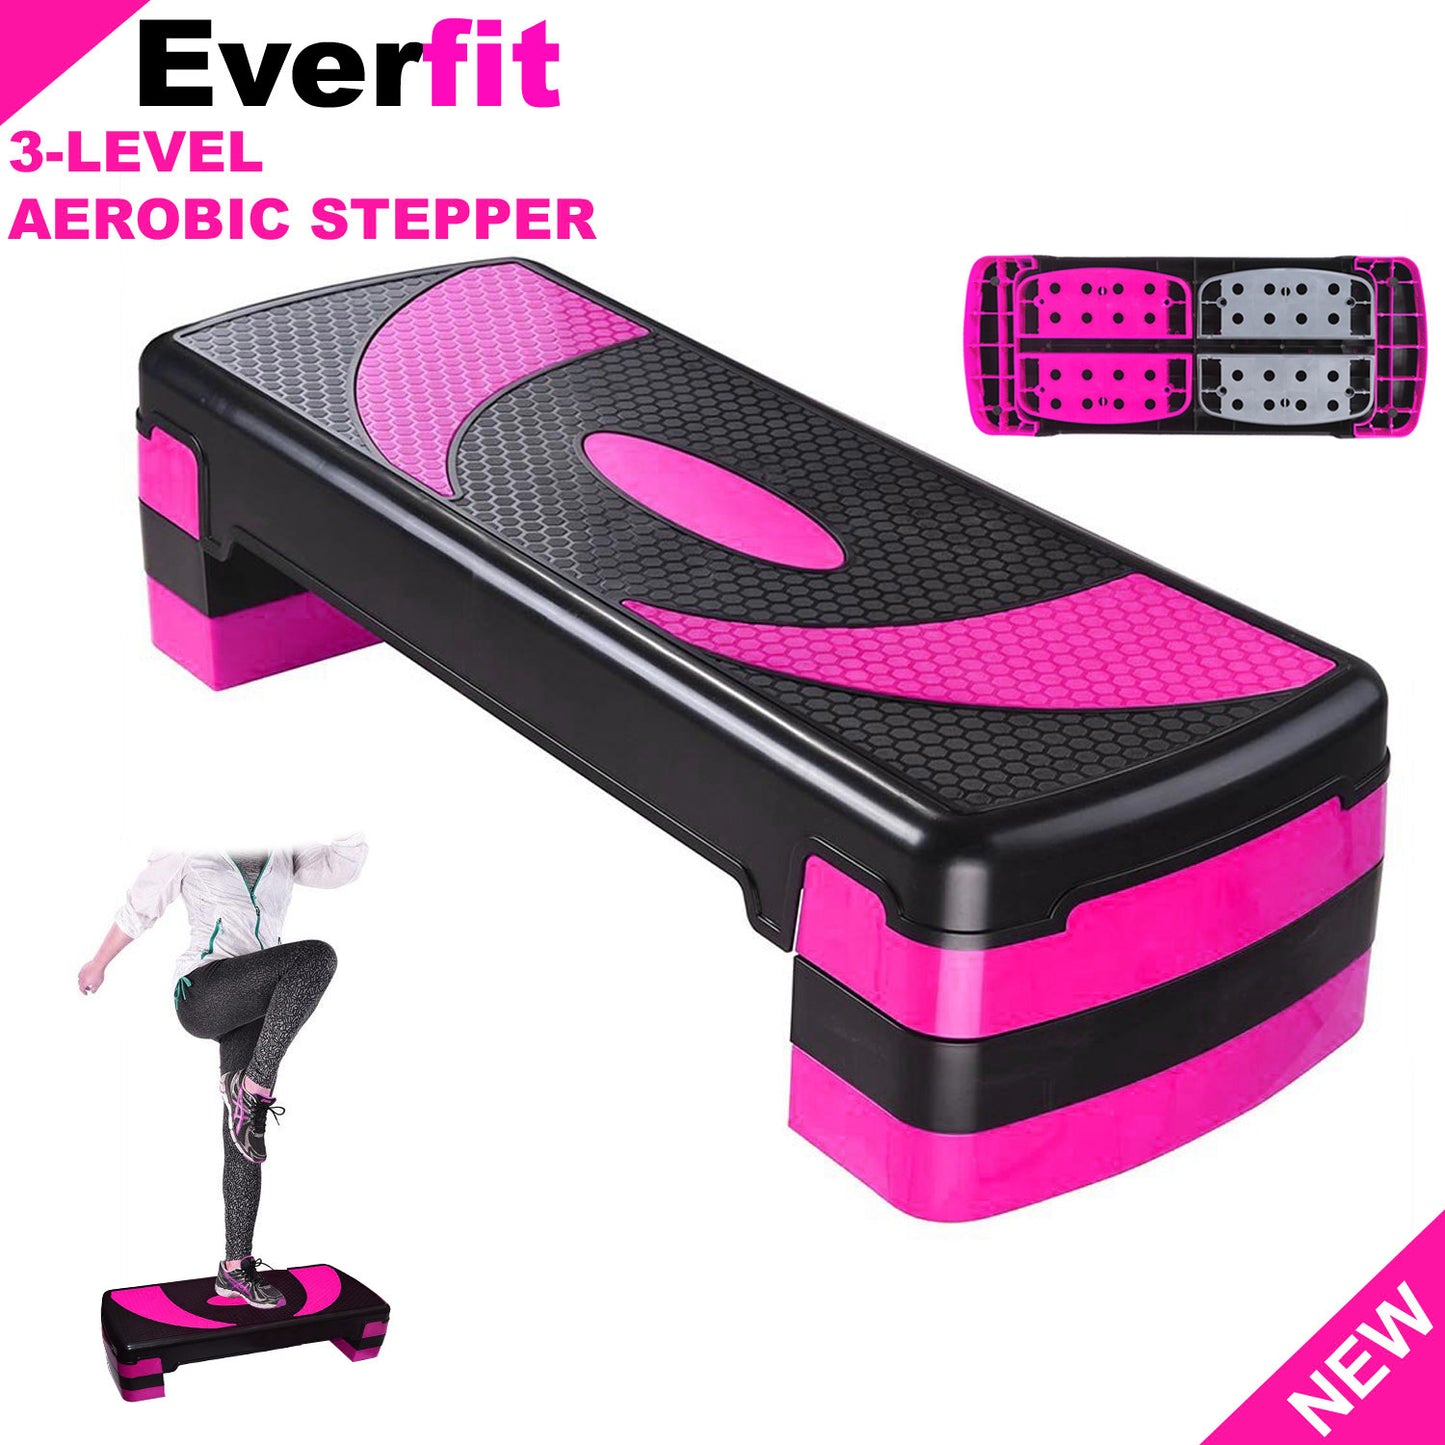 3 level Aerobic stepper- Fitness